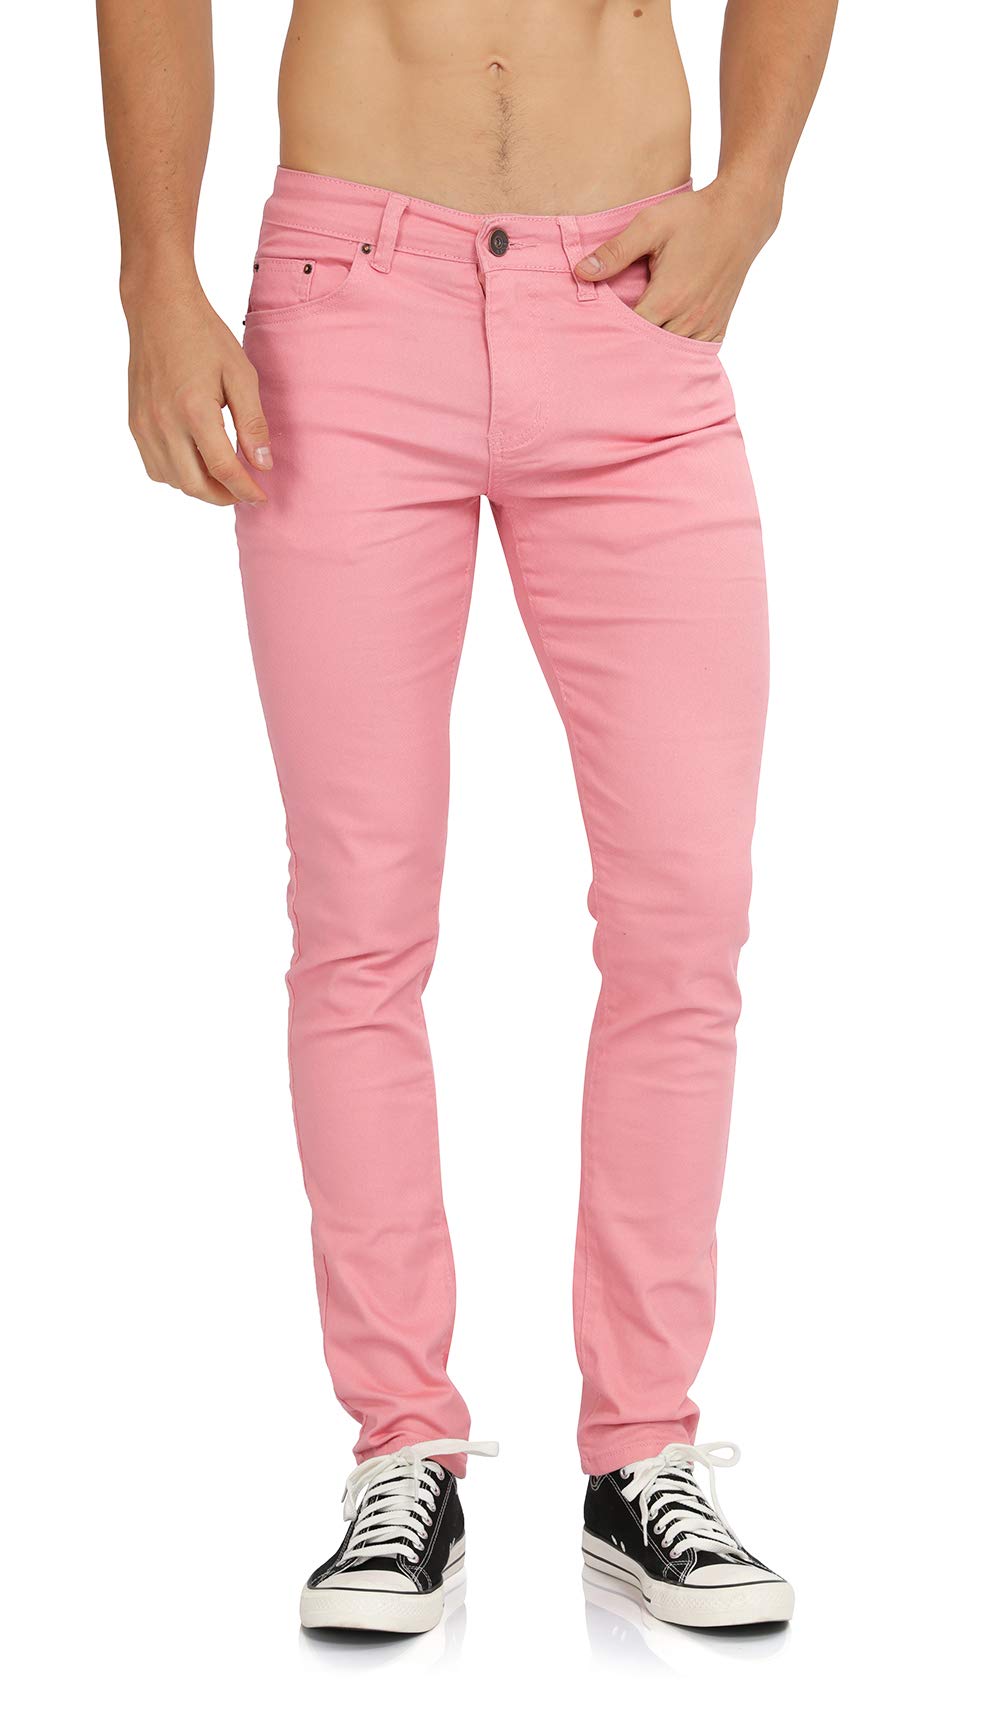 WULFUL Mens Skinny Slim Fit Stretch comfy Fashion Denim Jeans Pants (Pink, 31W x 31L)